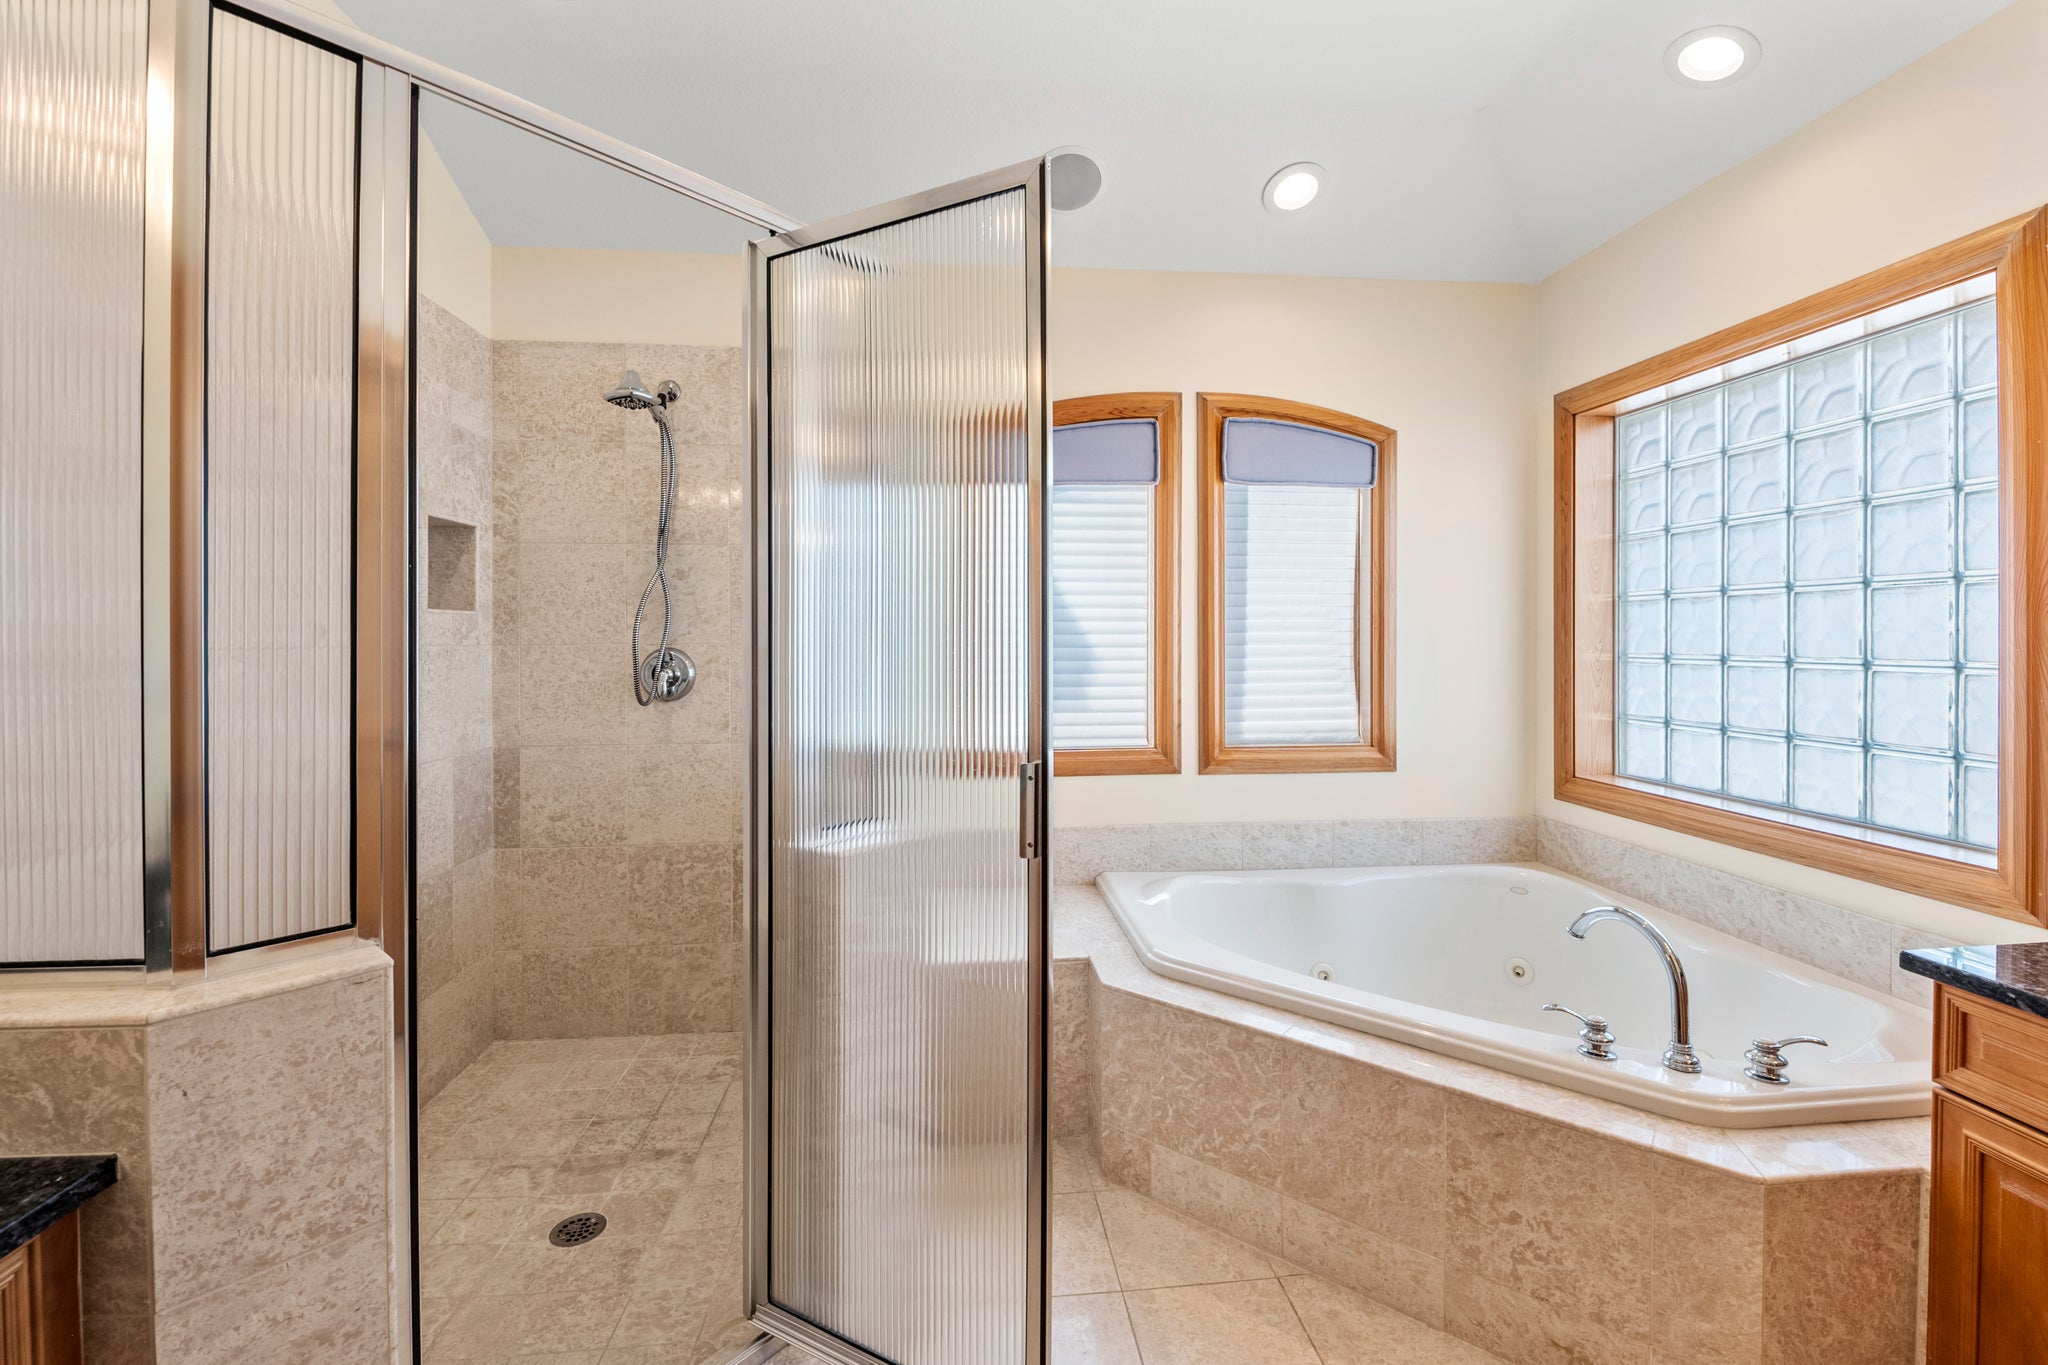 JR12:  Carolina Dream | Top Level Bedroom 8 Private Bath